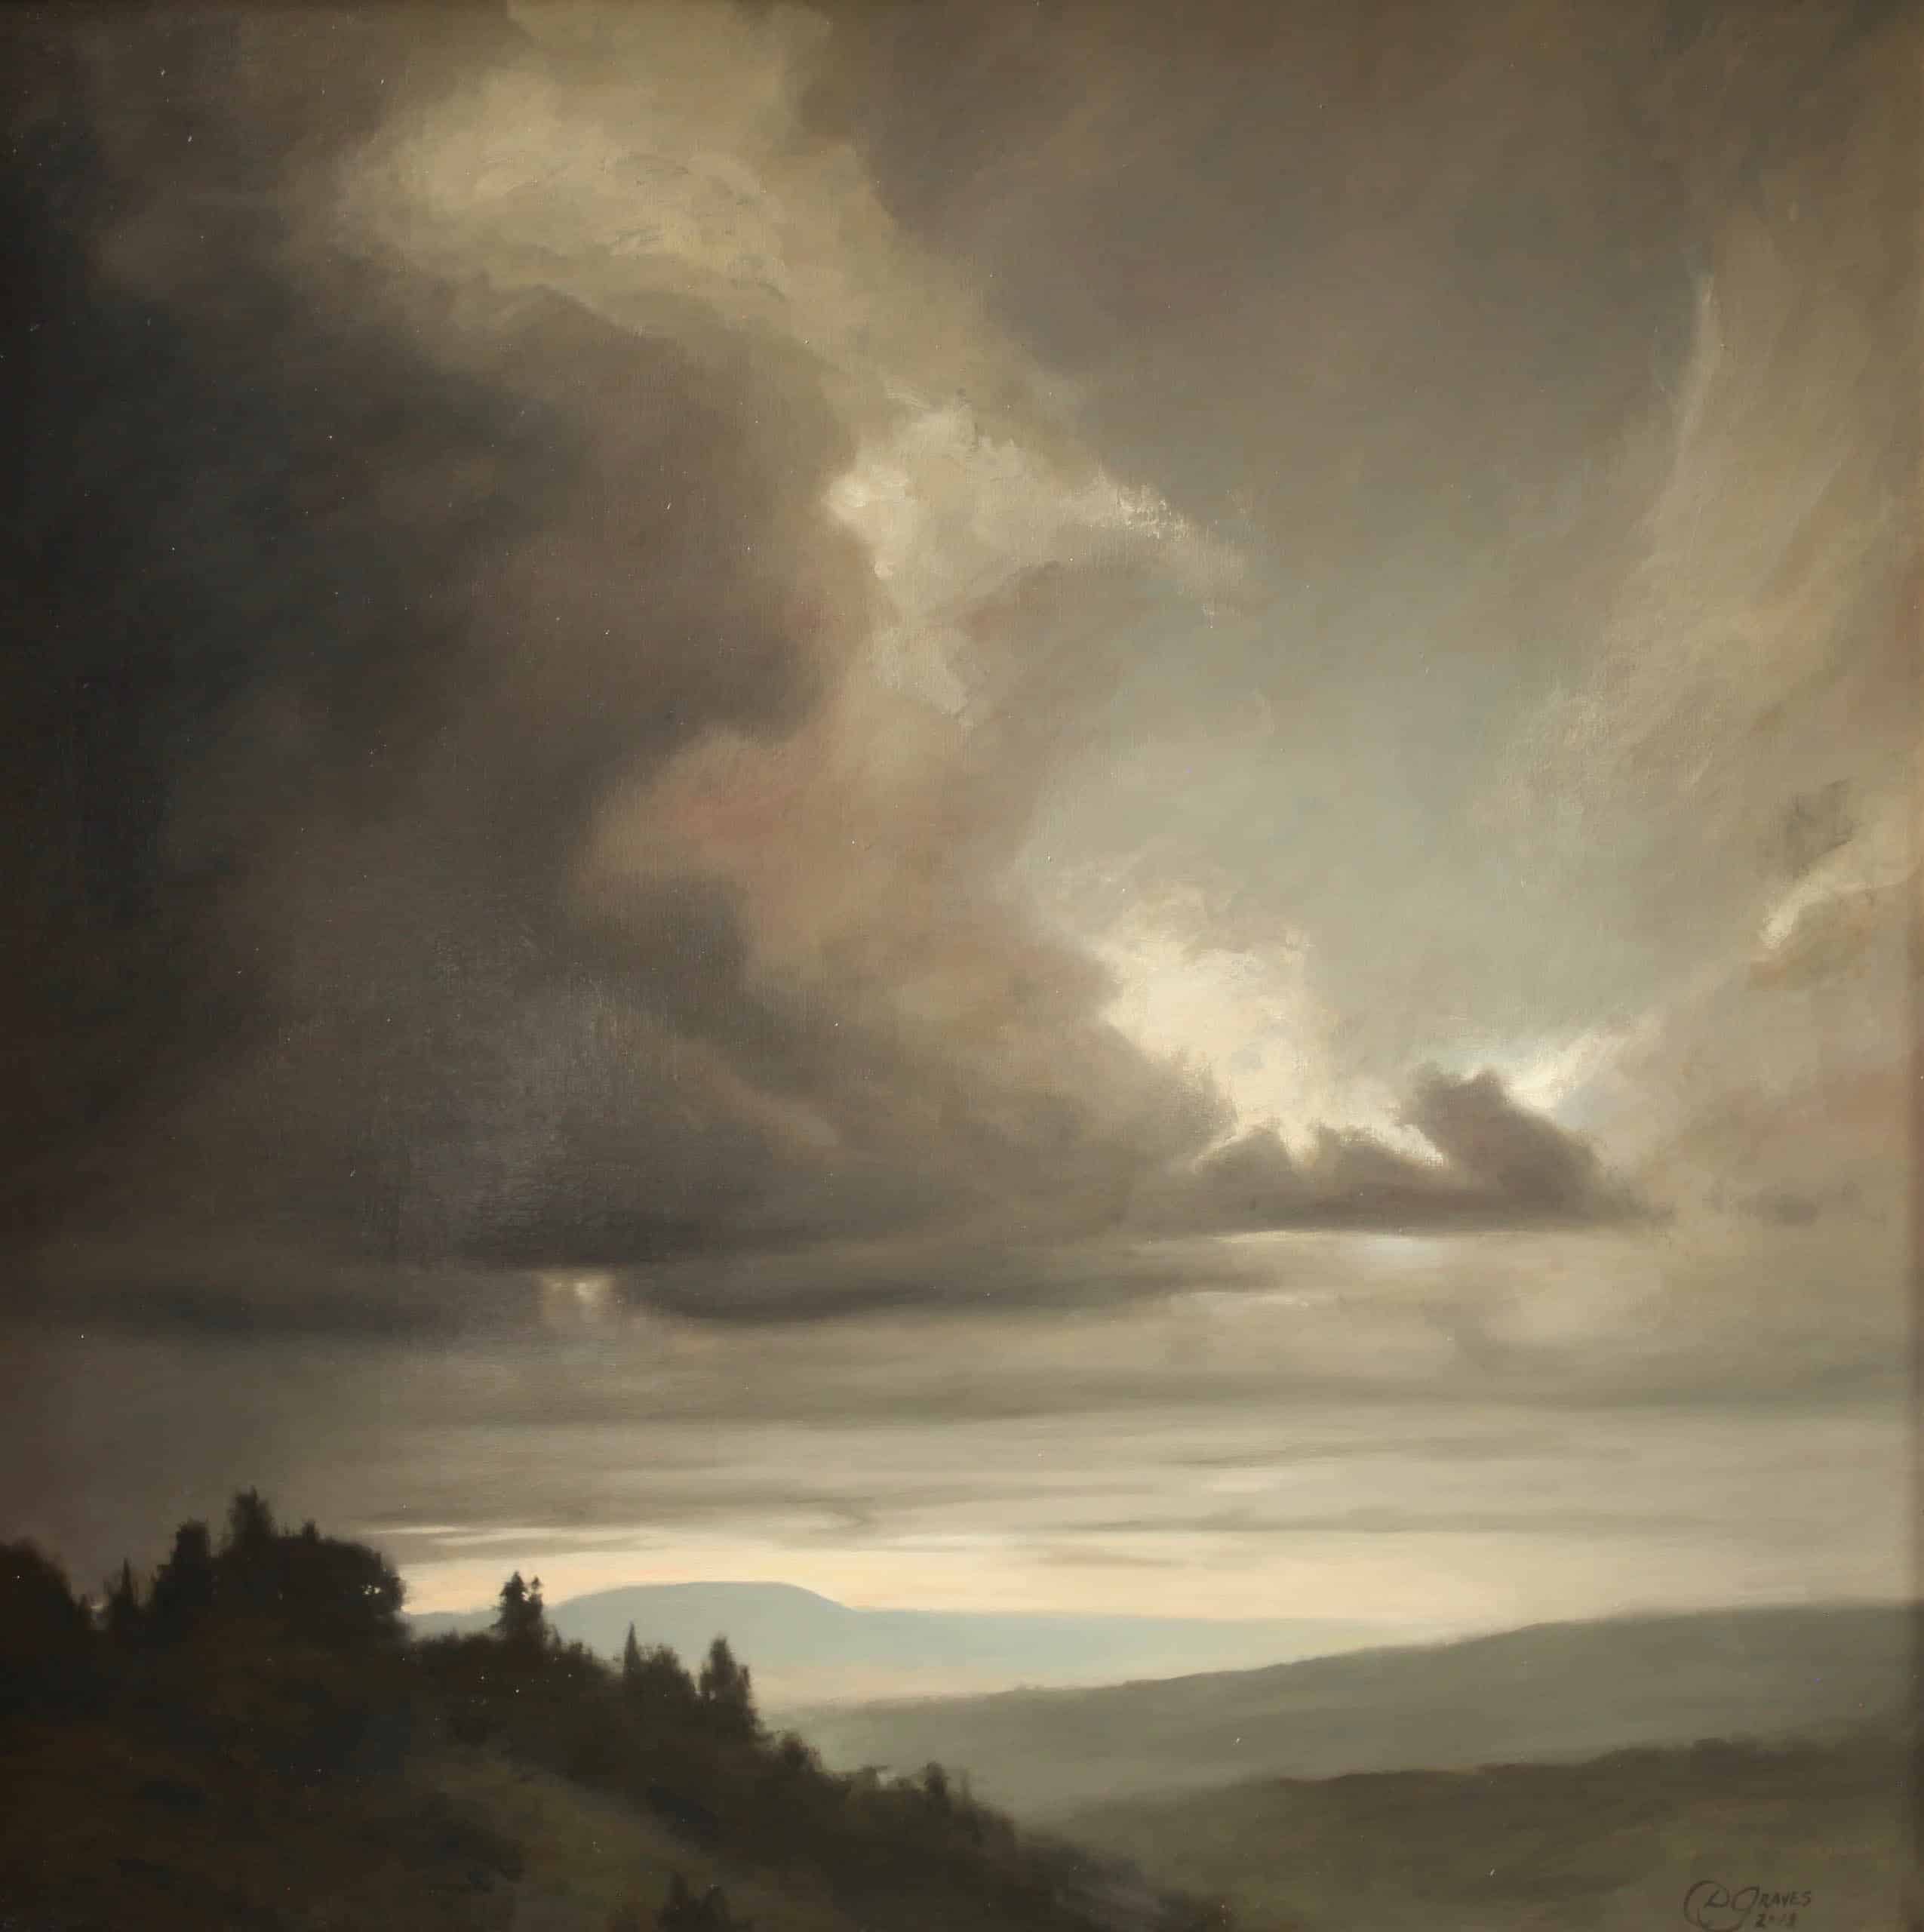 Daniel Graves, Storm over Florence, Oil on canvas, 122 x 122 cm, 2018